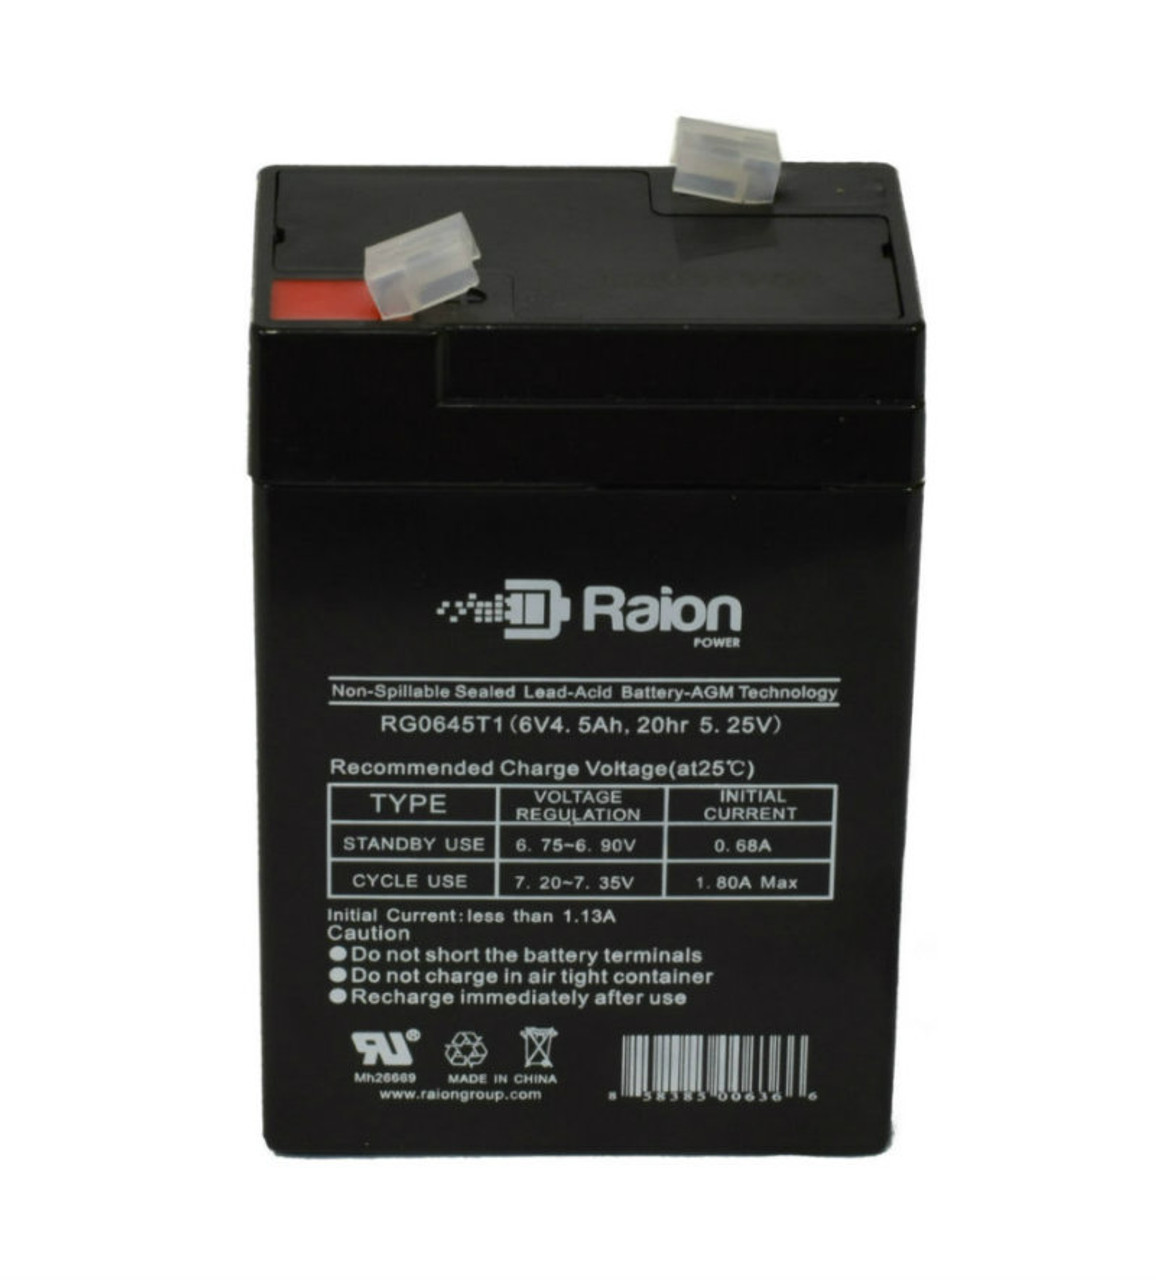 Raion Power RG0645T1 Replacement Battery Cartridge for RiiRoo 6V ATV Quad Bike